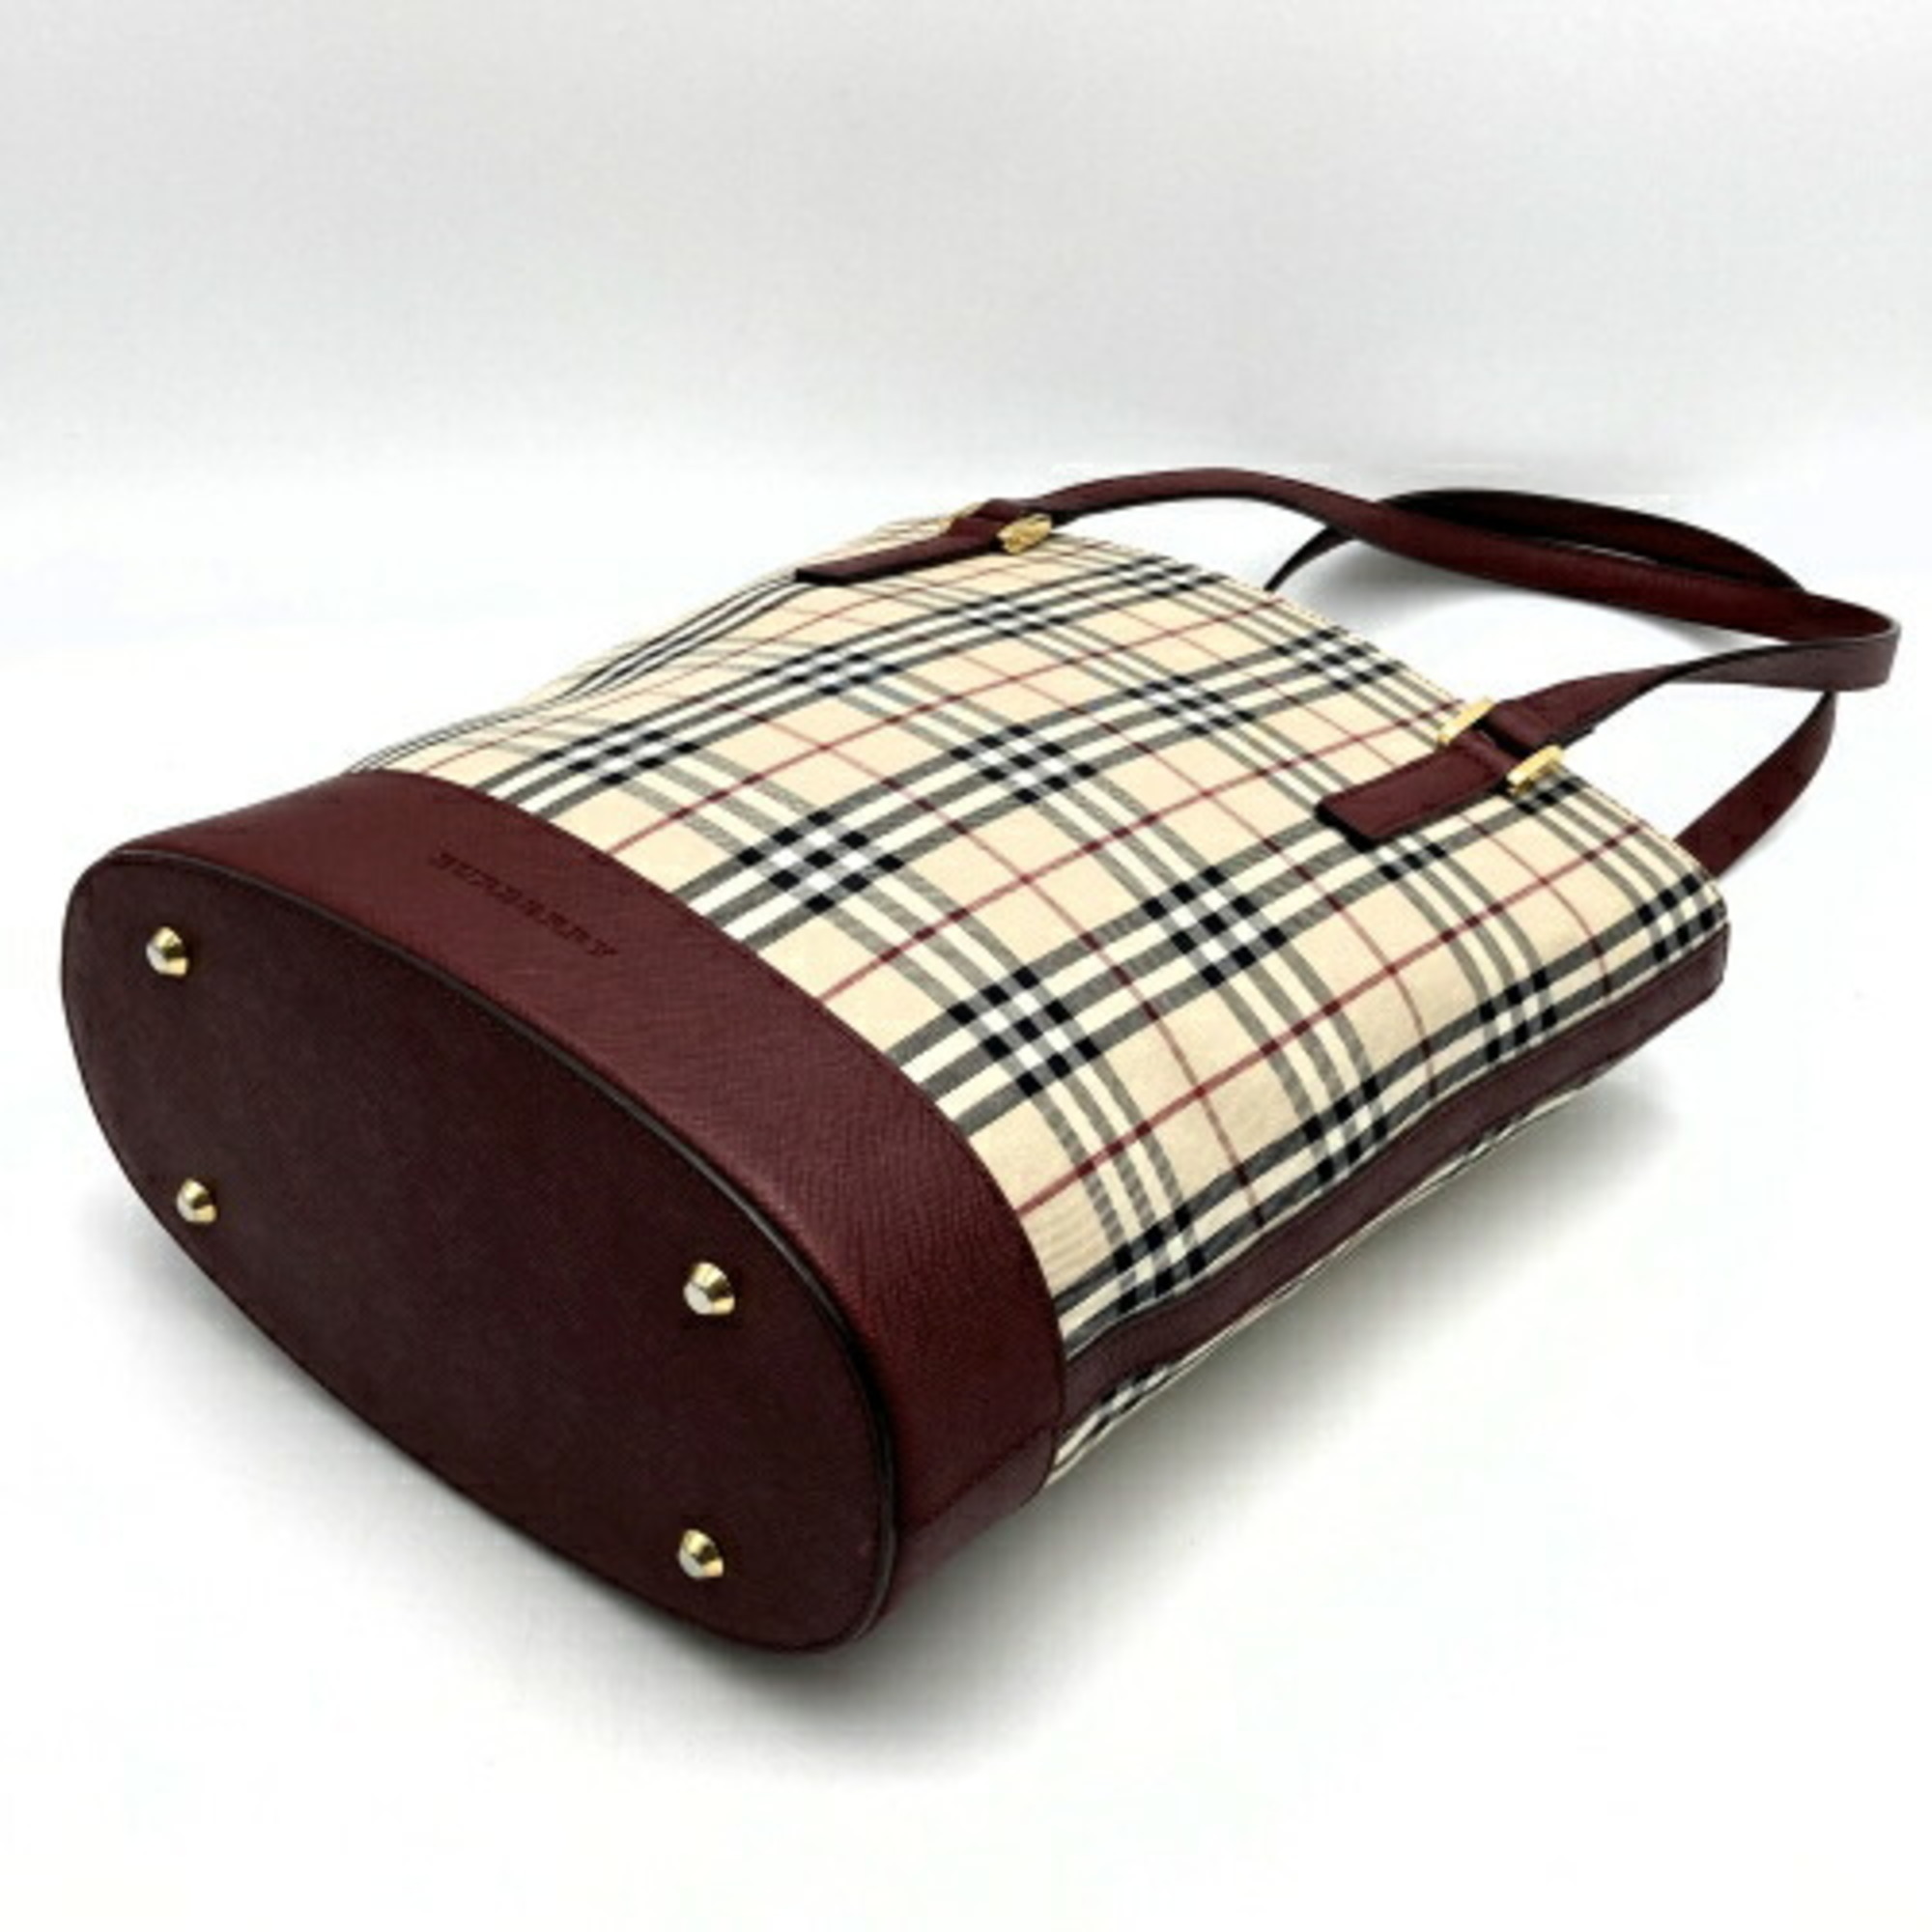 Burberry Tote Bag Handbag Nova Check Beige Canvas Leather BURBERRY ITGM4095SR7Y